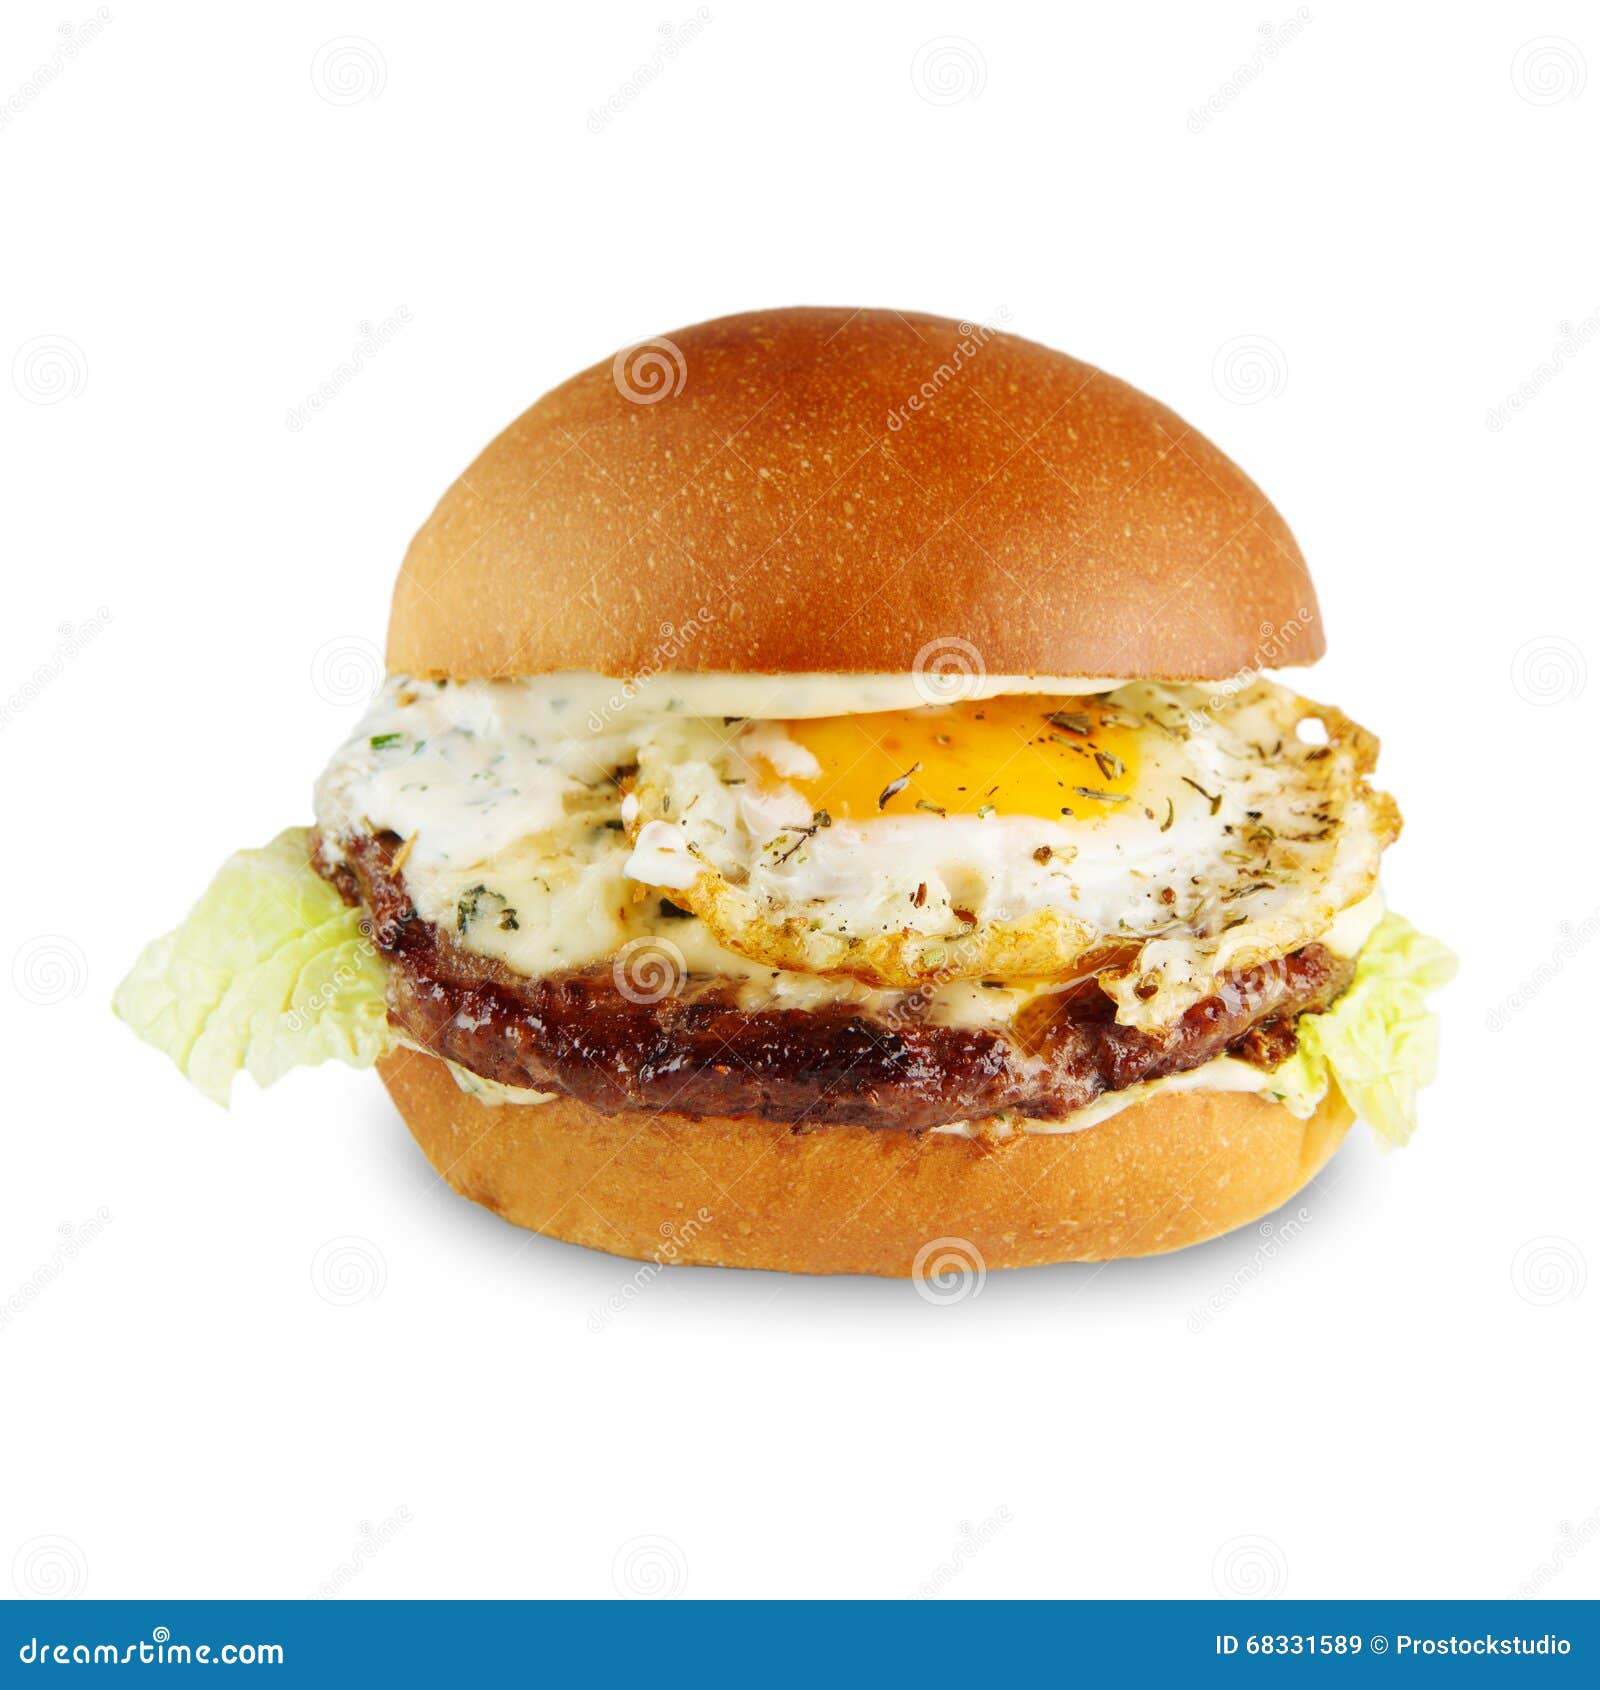 Tasty Cheeseburger Isolated At White Background Stock Image - Image of ...